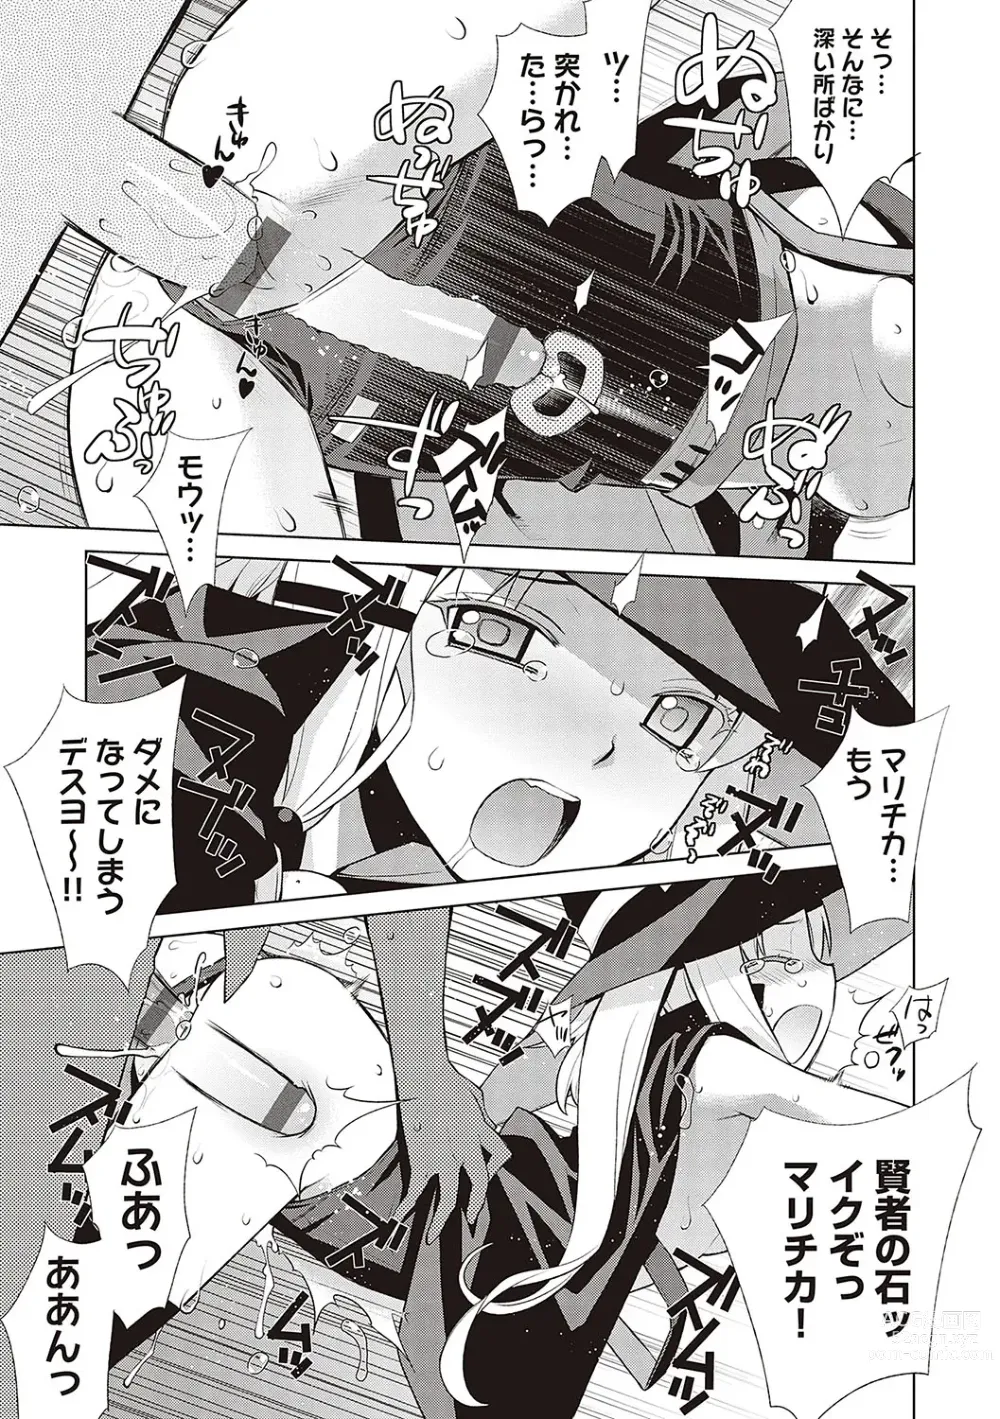 Page 260 of manga KOAKUMA DAISY